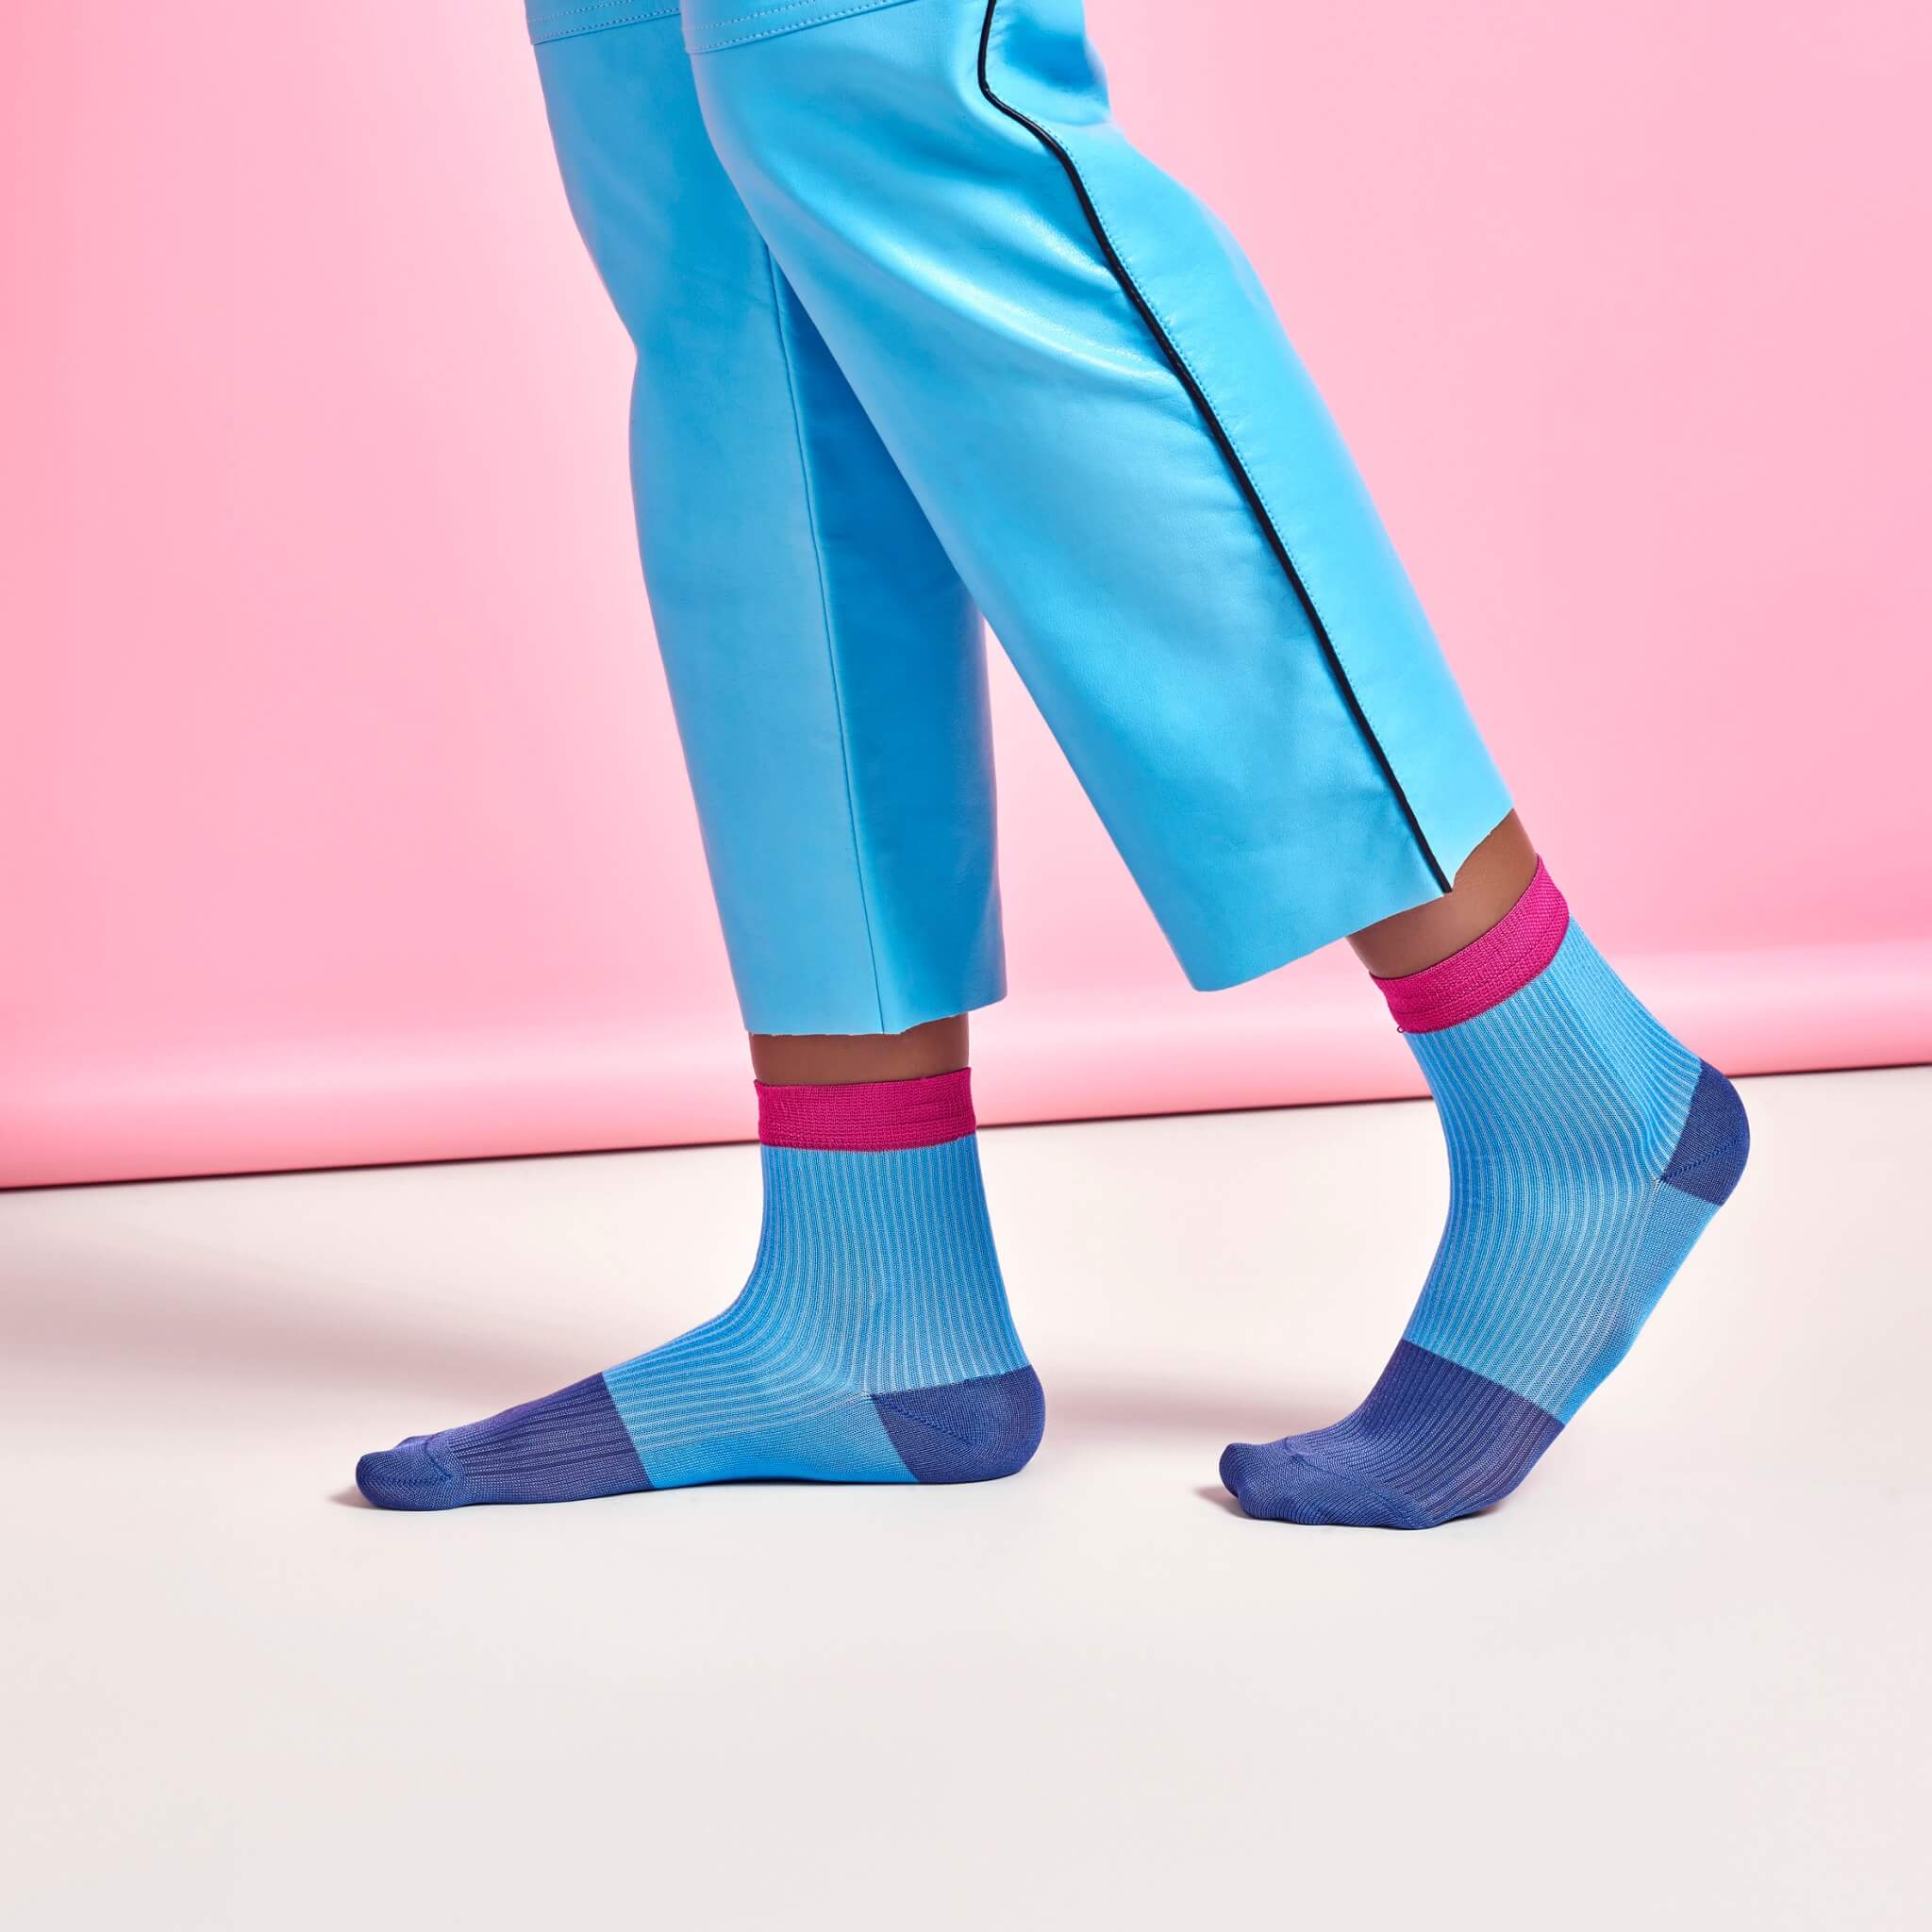 Dámske modré ponožky Happy Socks Janna // kolekcia Hysteria